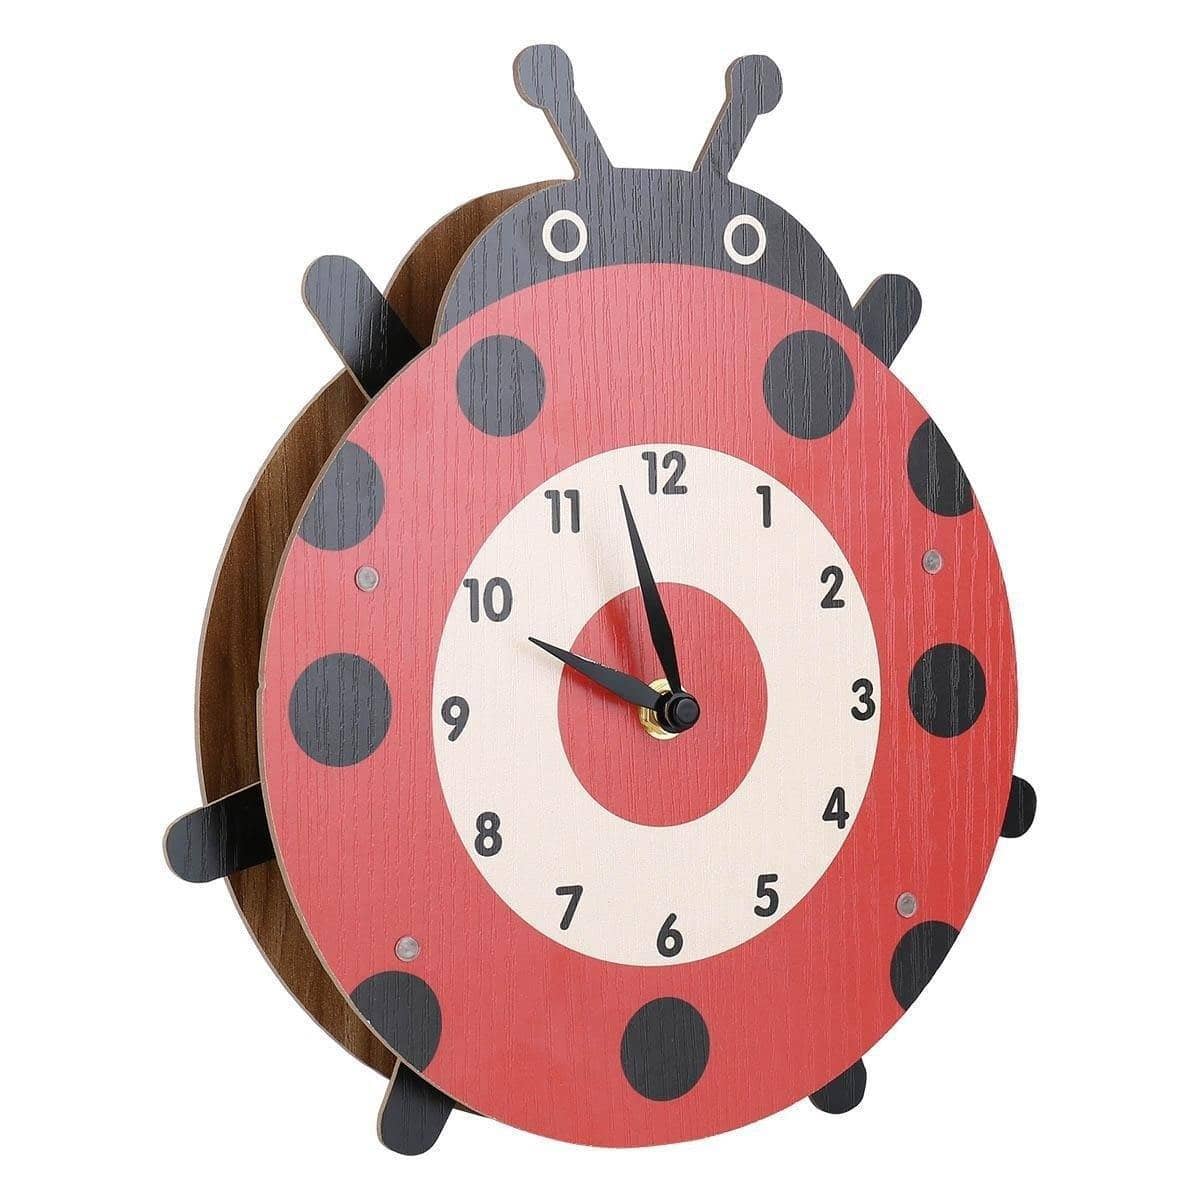 Cartoon Ladybug Wall Clock - Fun & Whimsical Home Decor